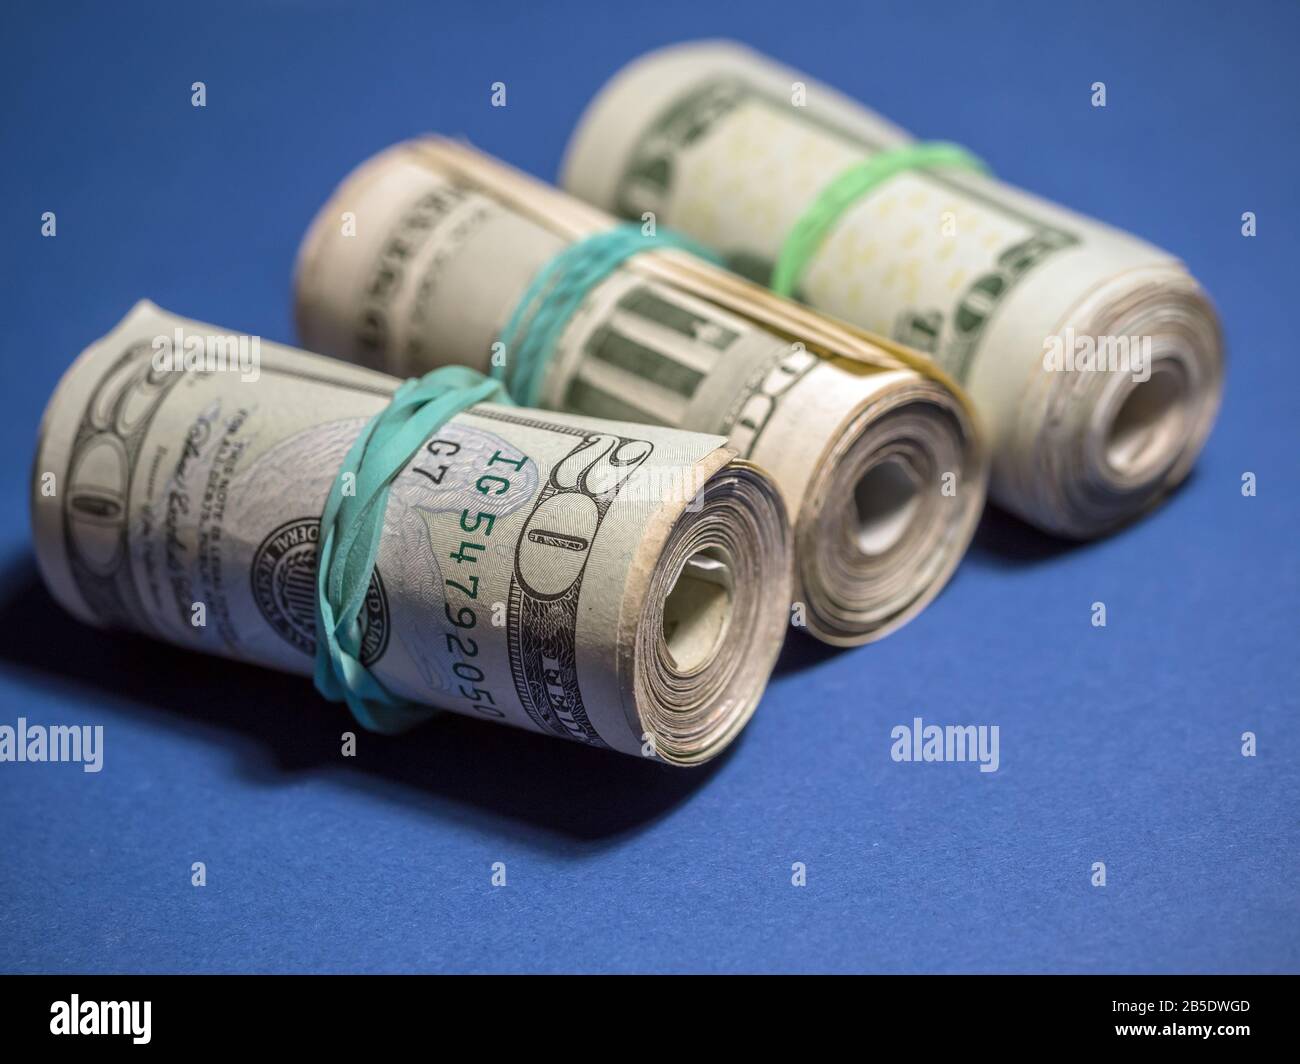 Rolls of American dollar bills on blue background Stock Photo